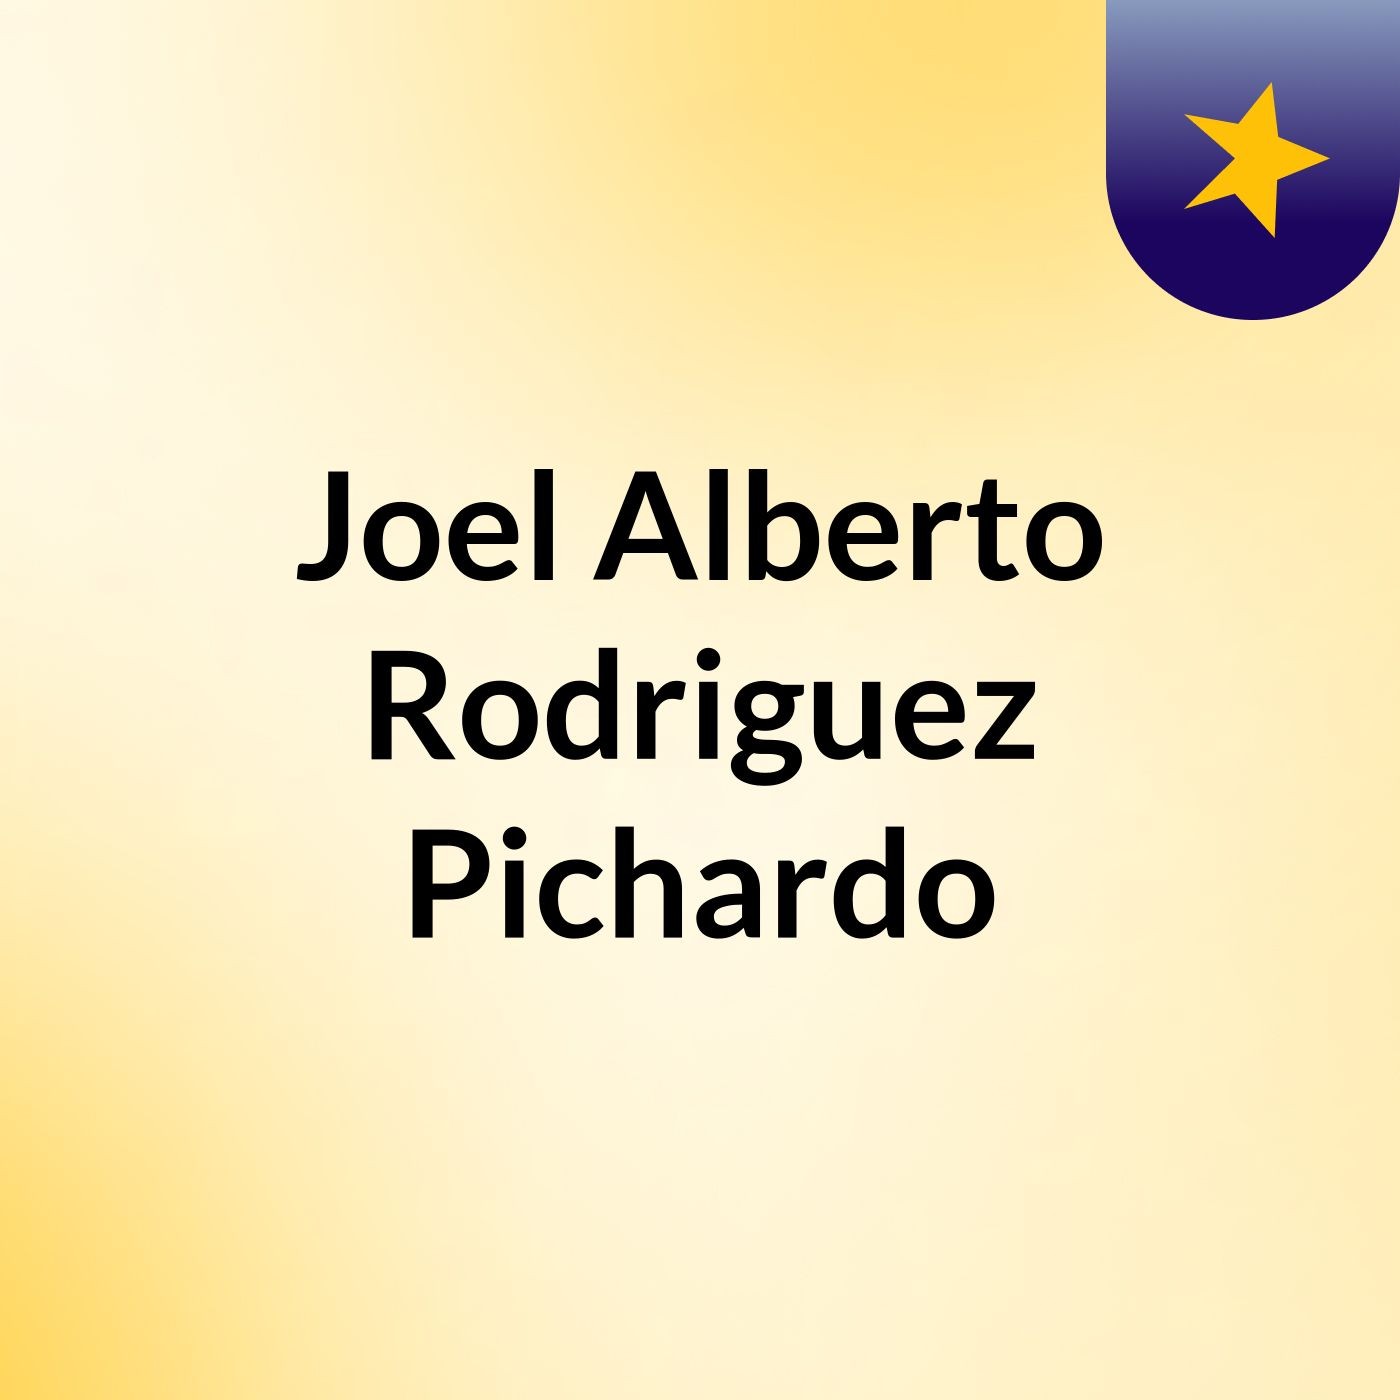 Joel Alberto Rodriguez Pichardo